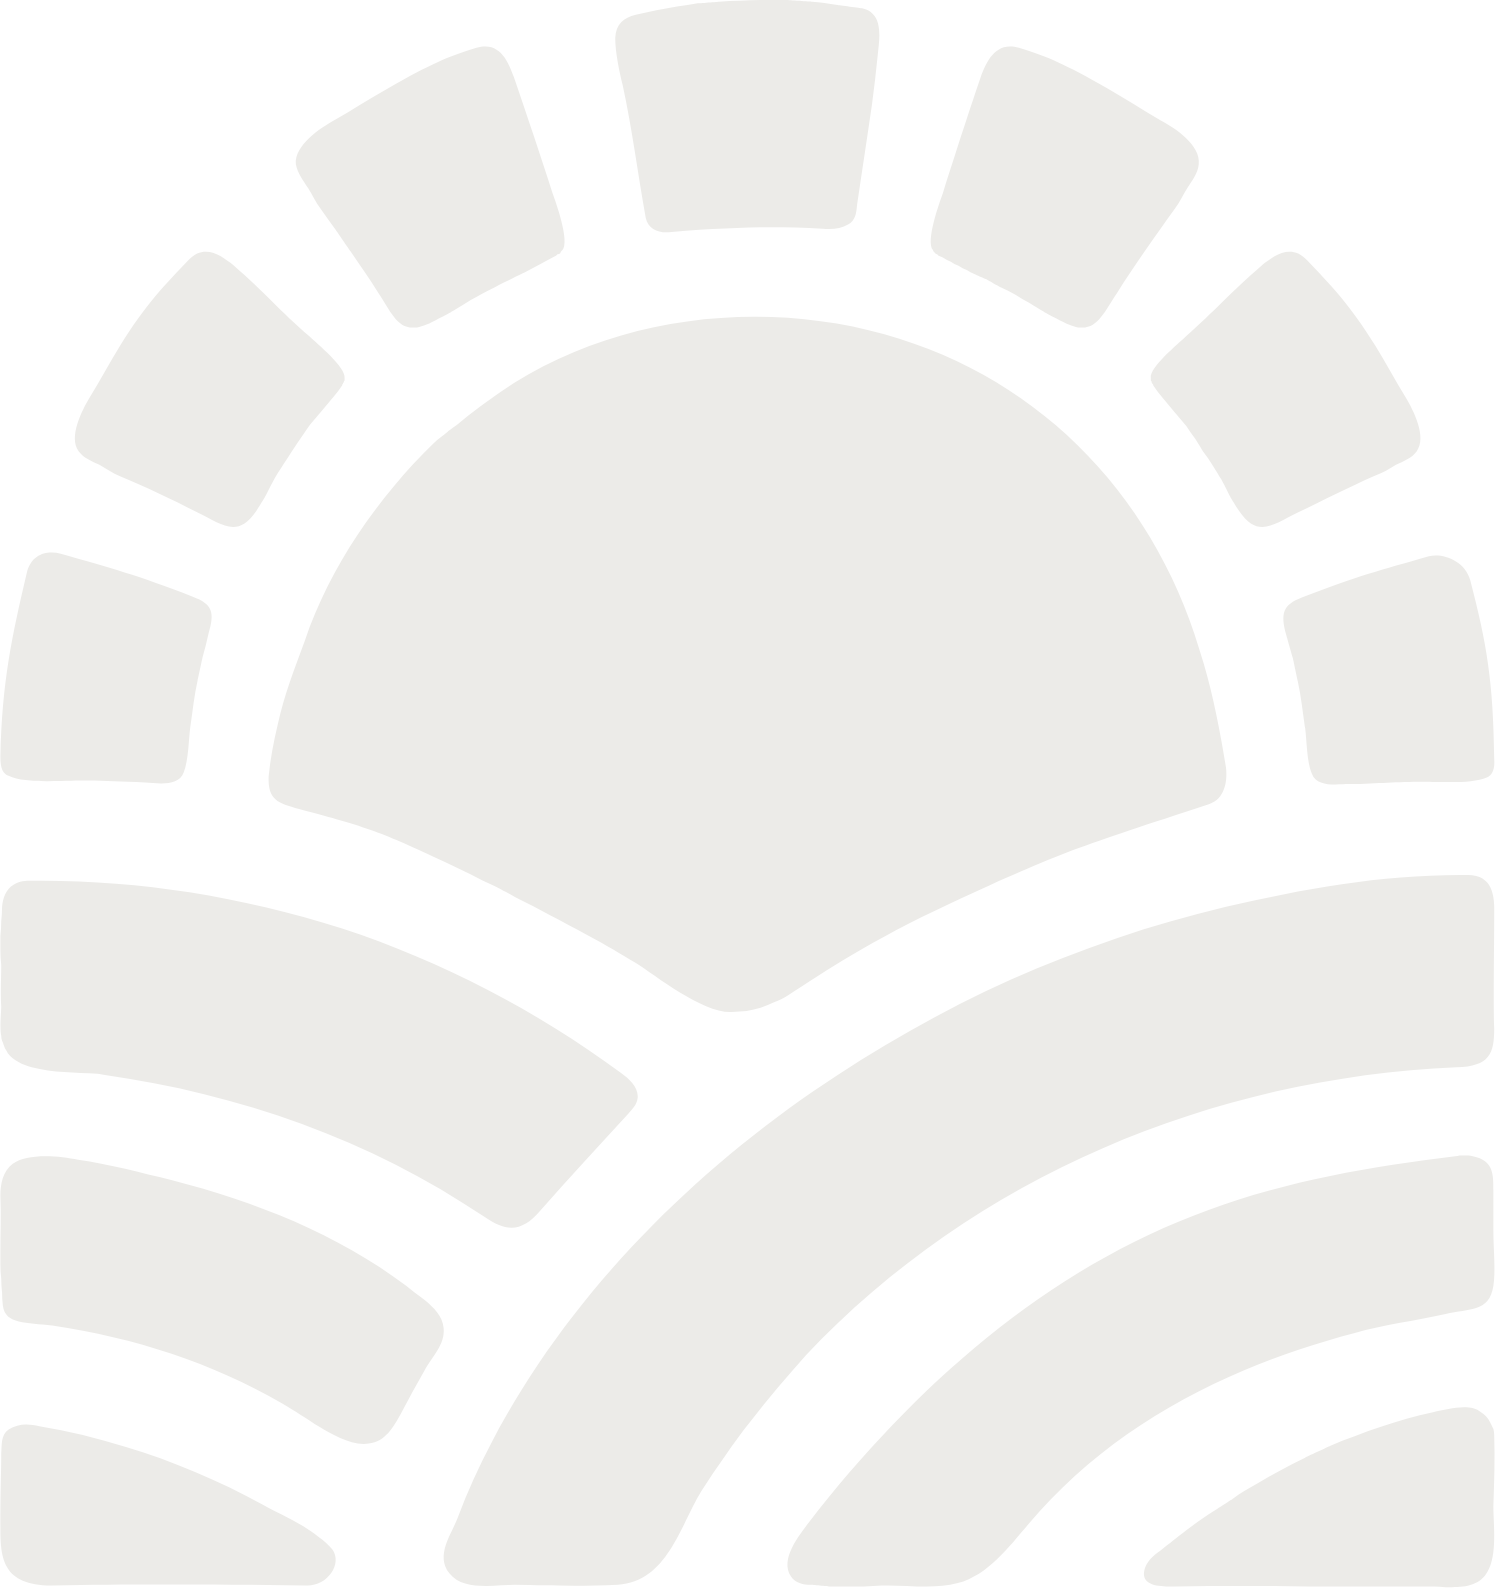 Green Thumb Industries logo pour fonds sombres (PNG transparent)